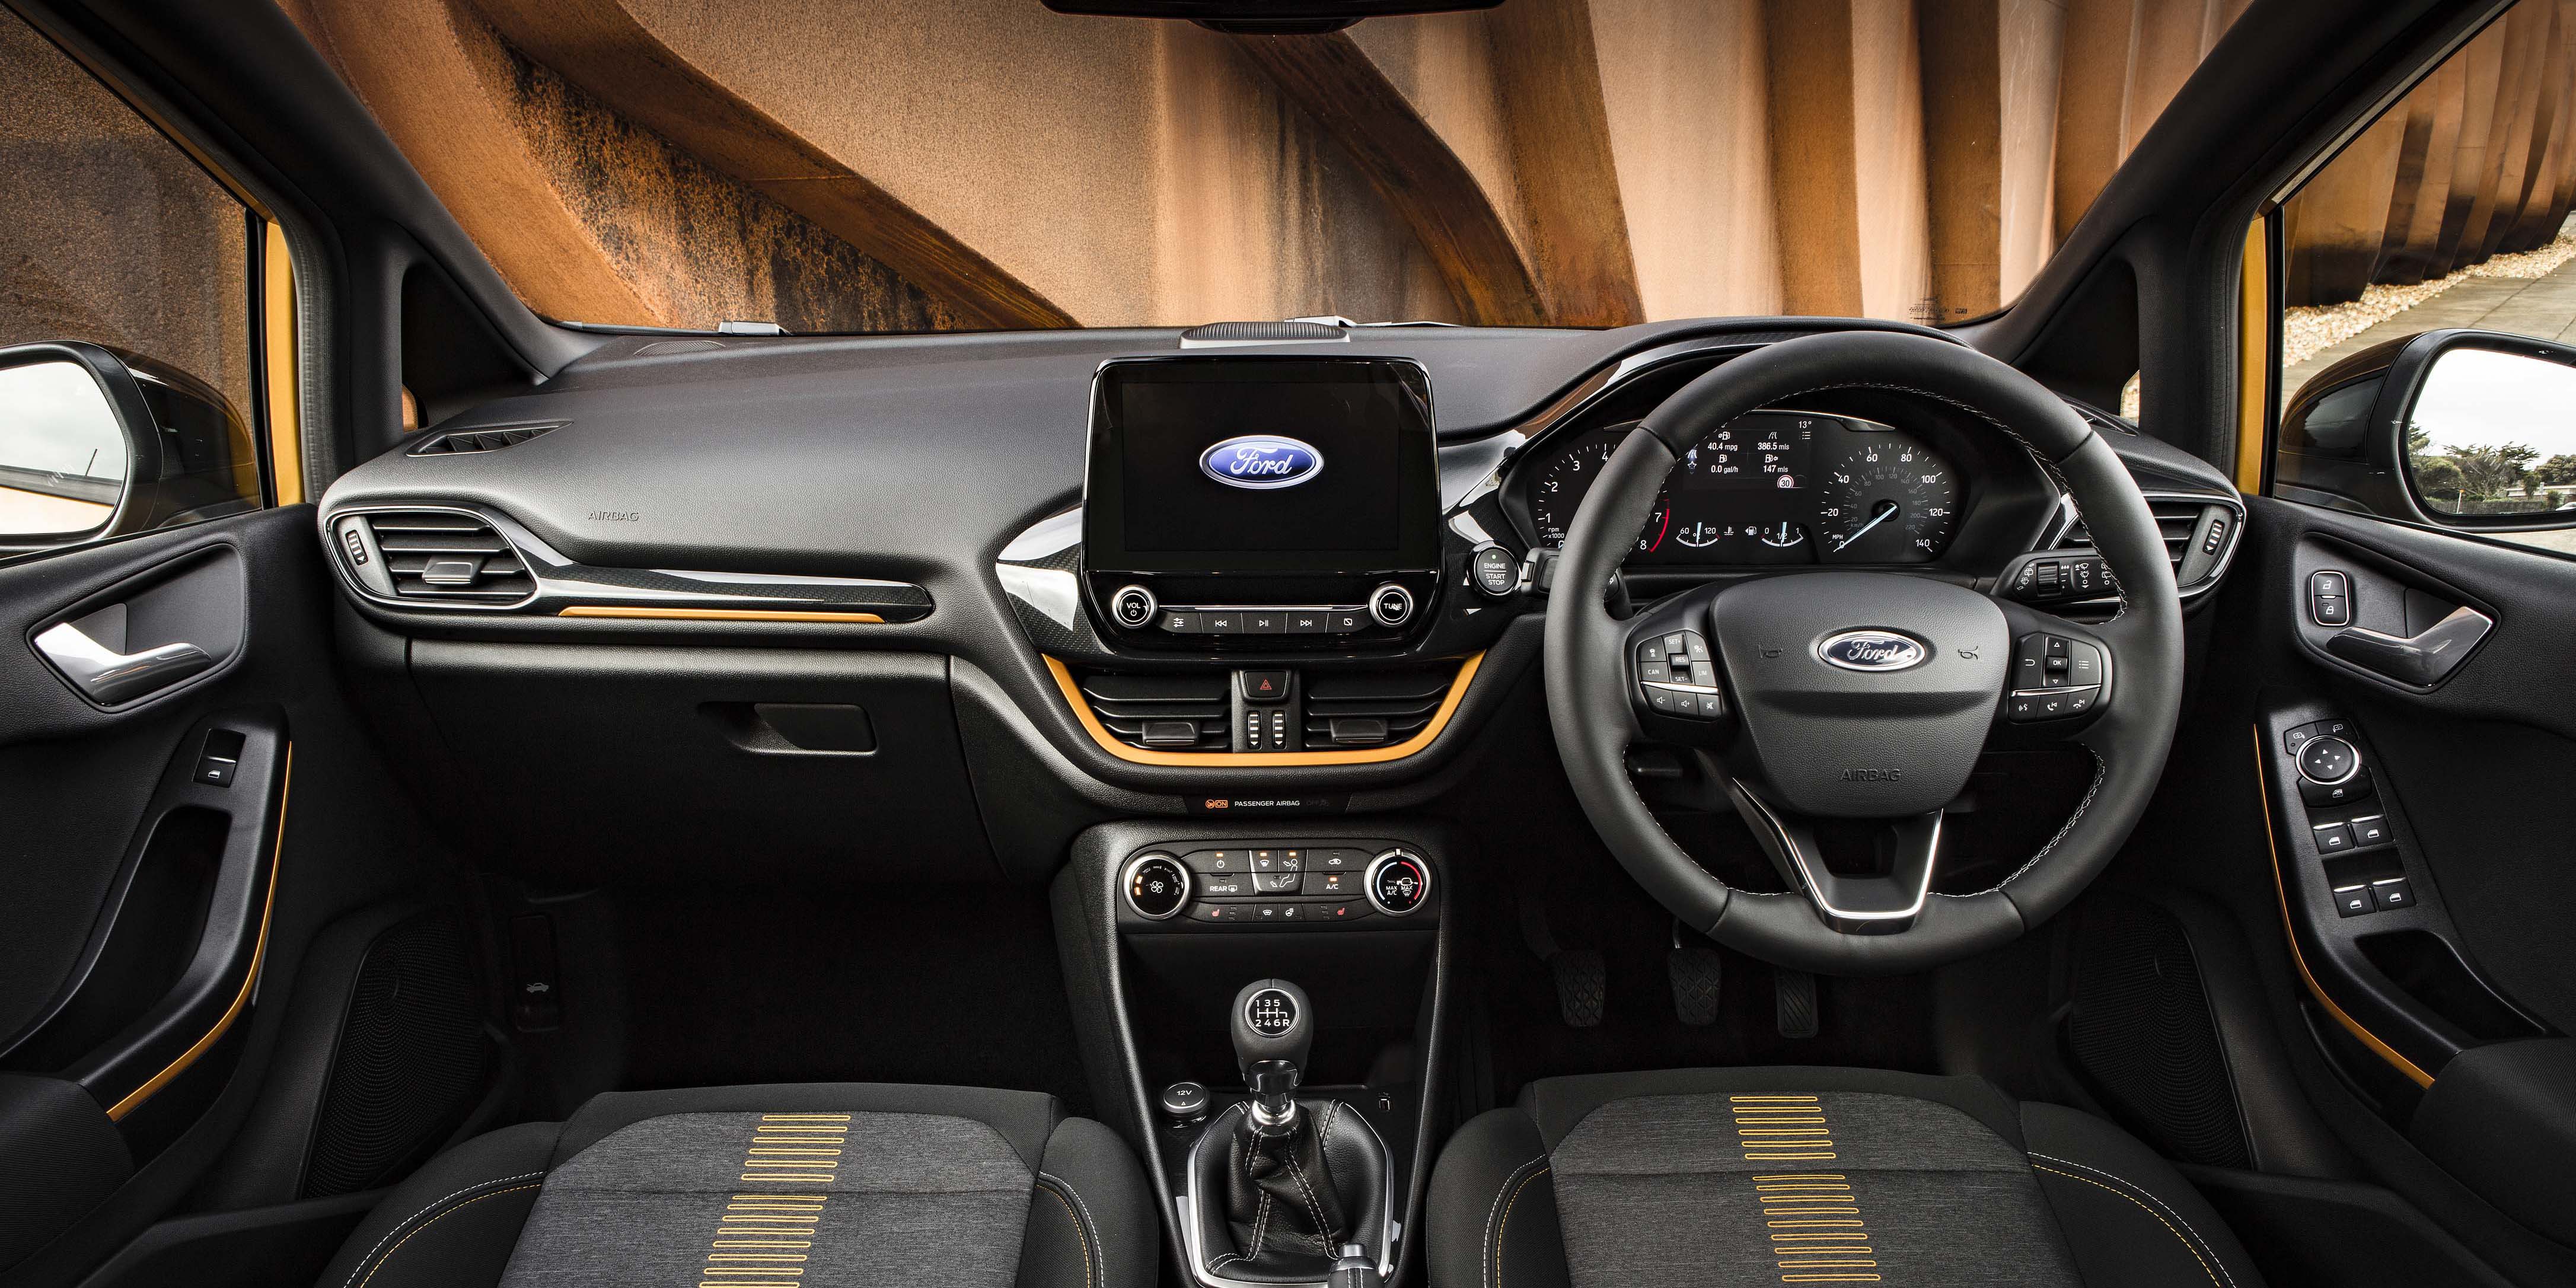 Ford Fiesta Interior Wanna be a Car